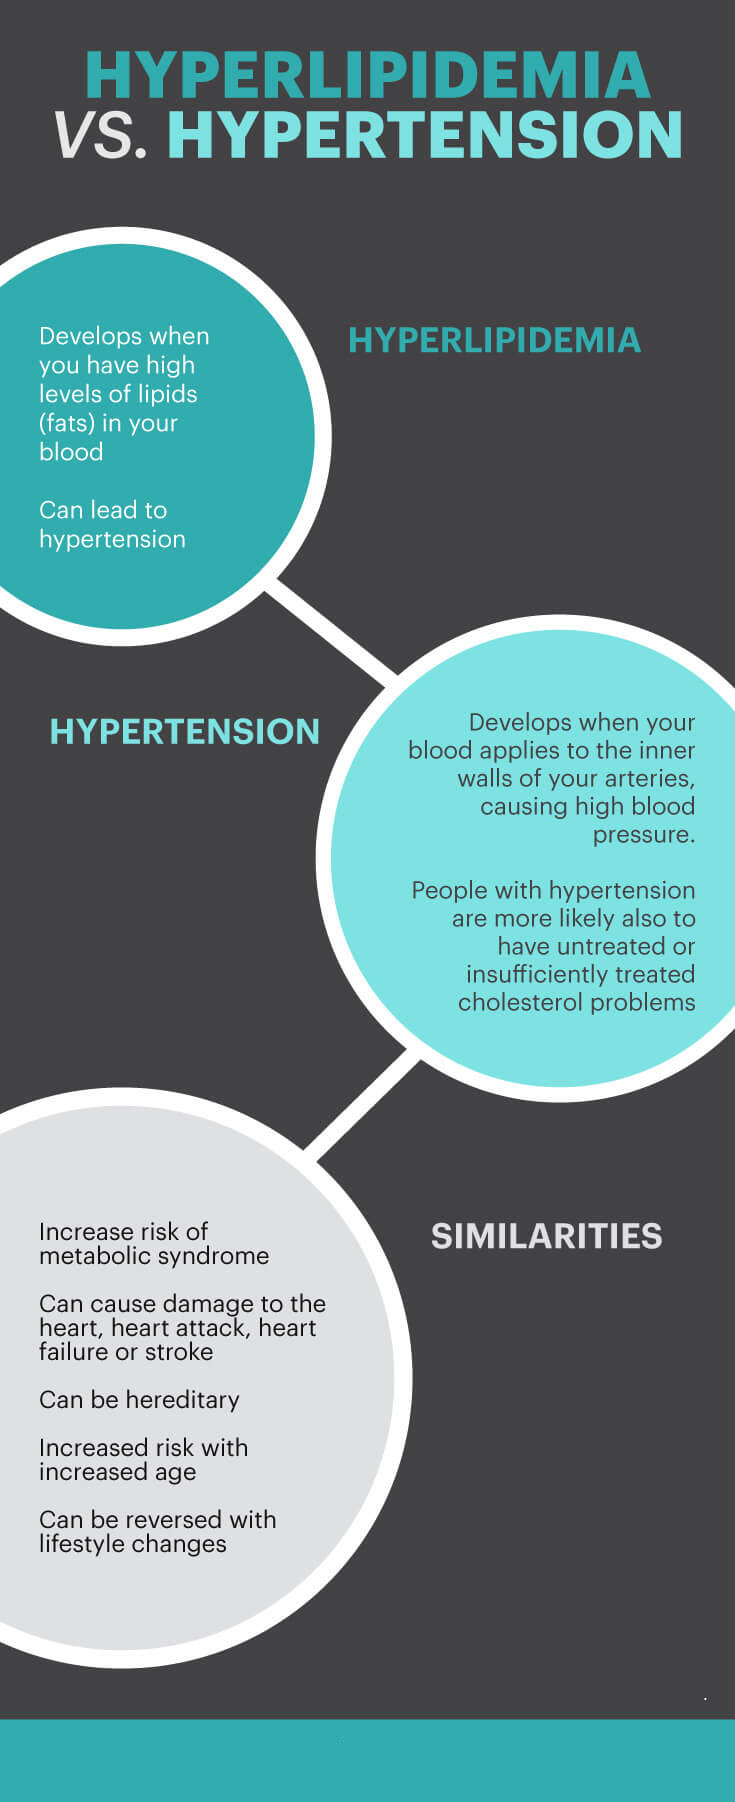 Hyperlipidemia vs. hypertension - MKexpress.net